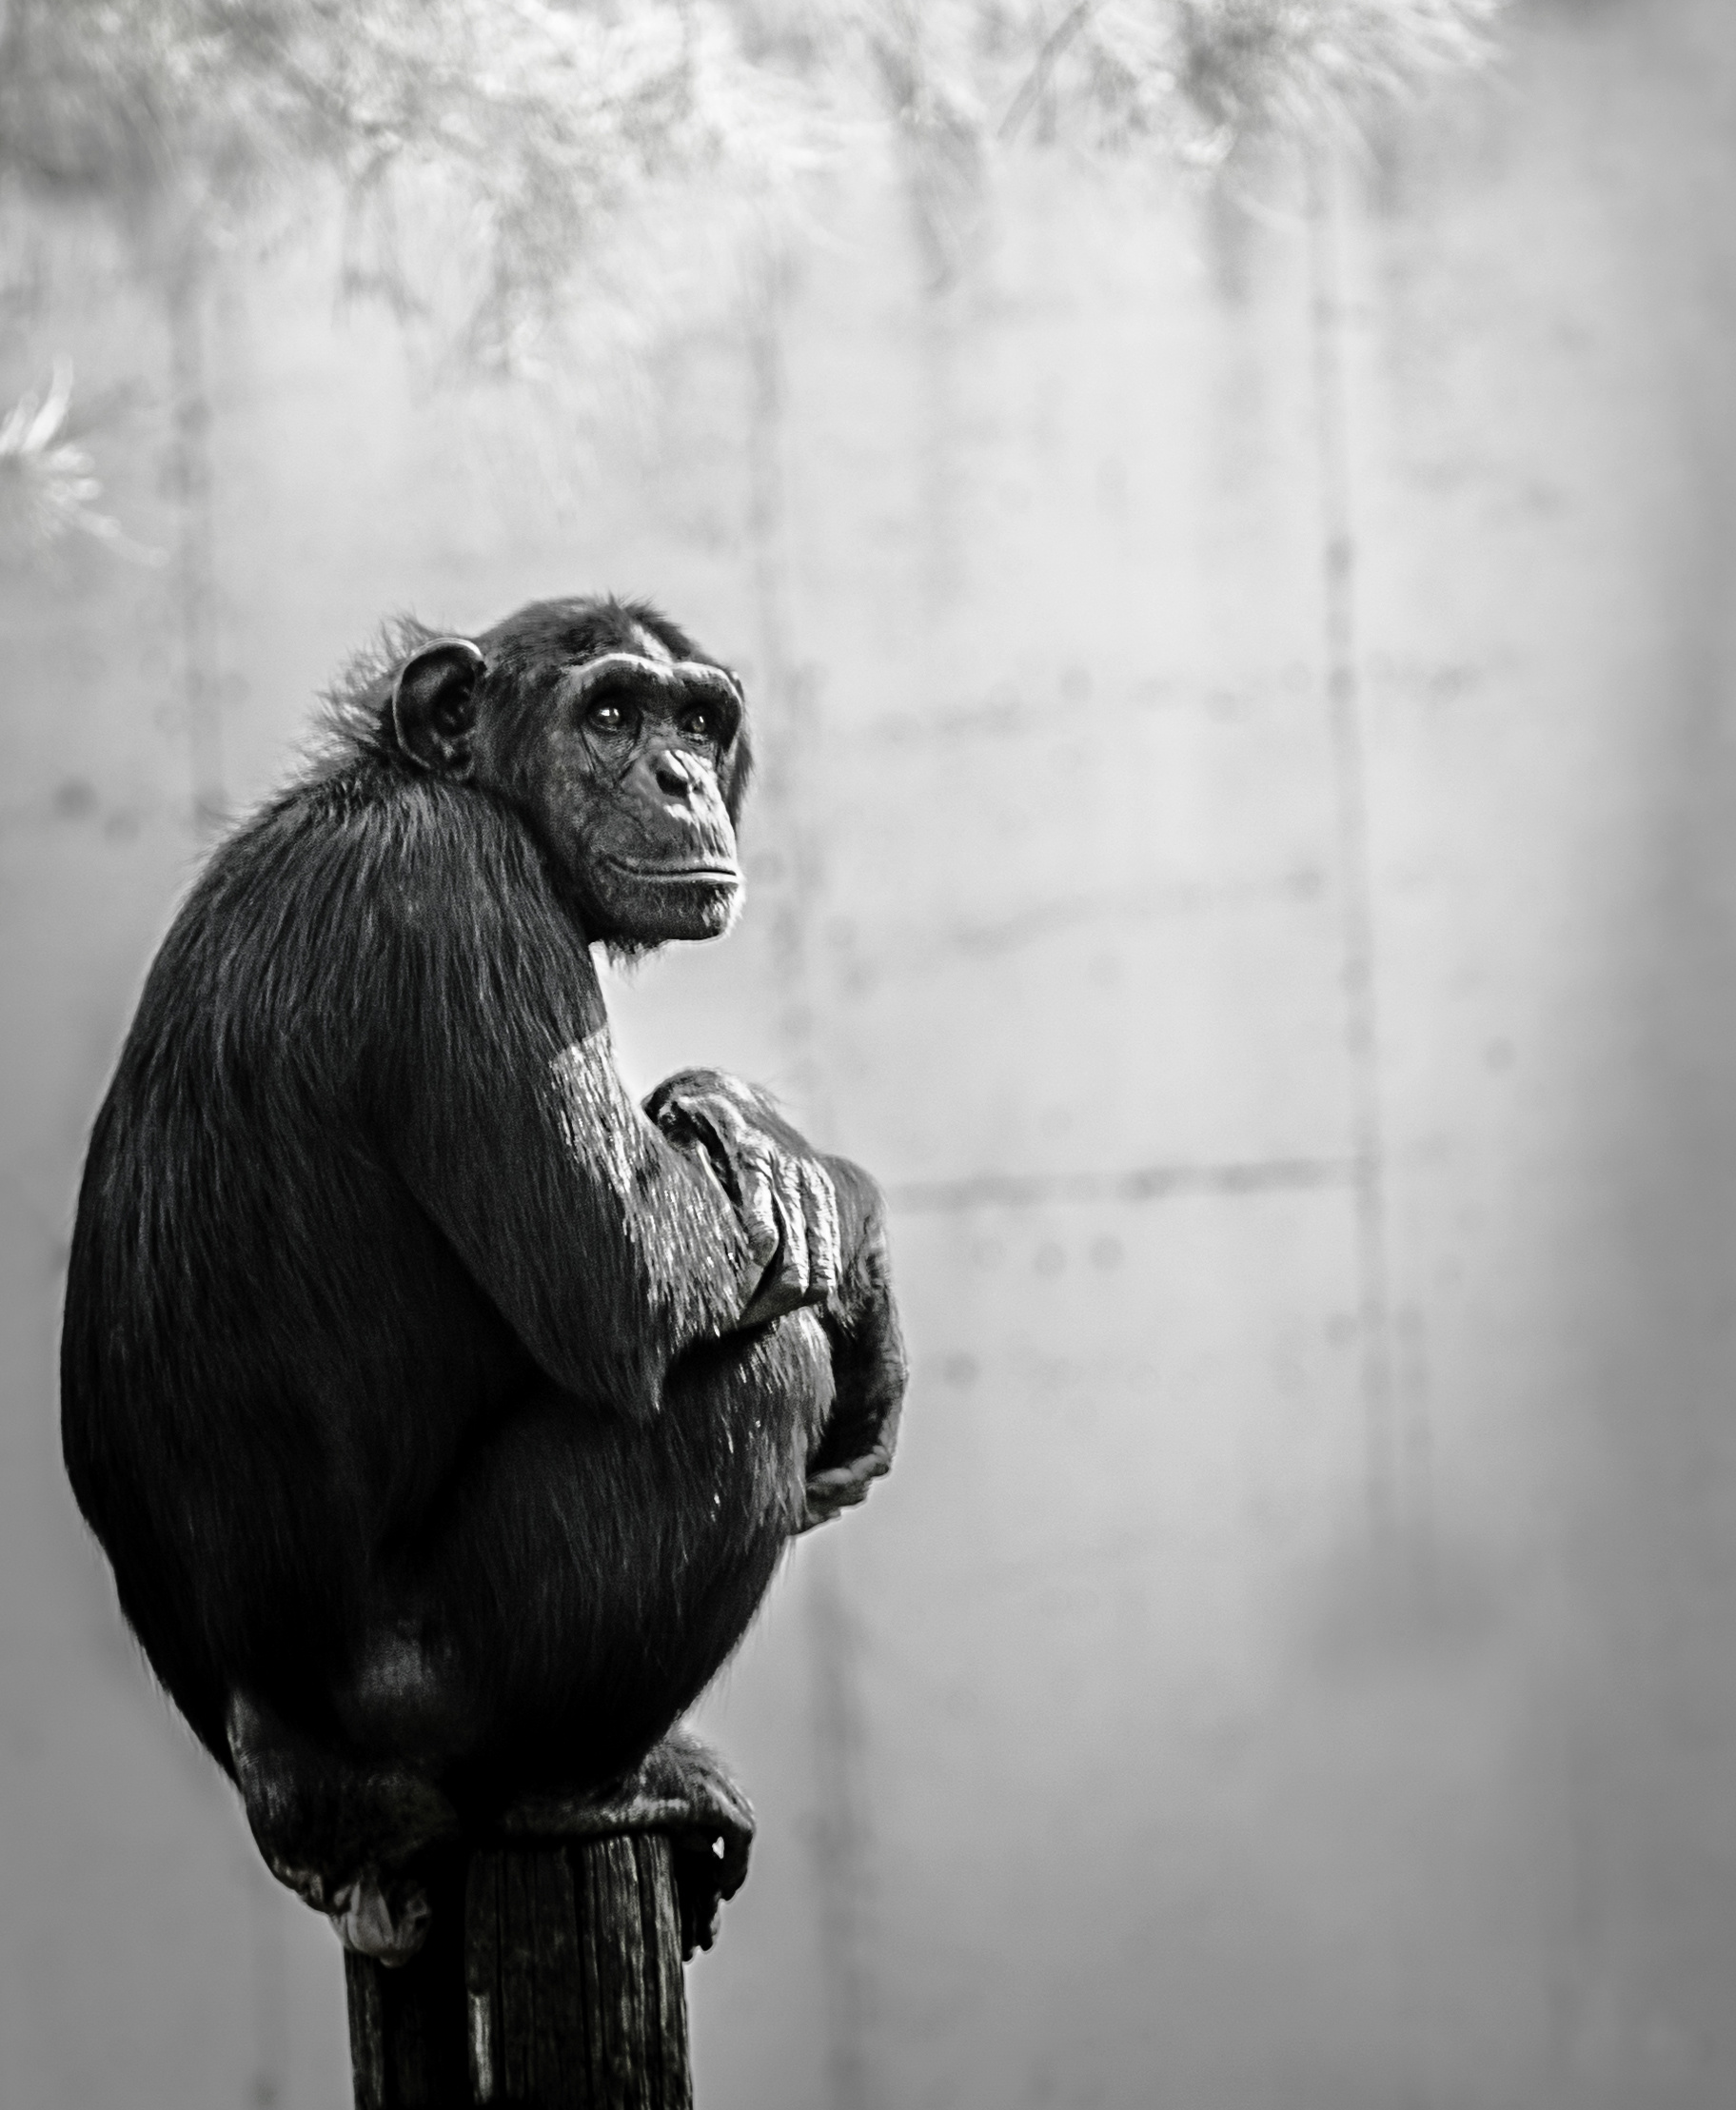 Chimpanzee, Sitting on wood, Calm and composed, Serene photo, 1830x2220 HD Handy